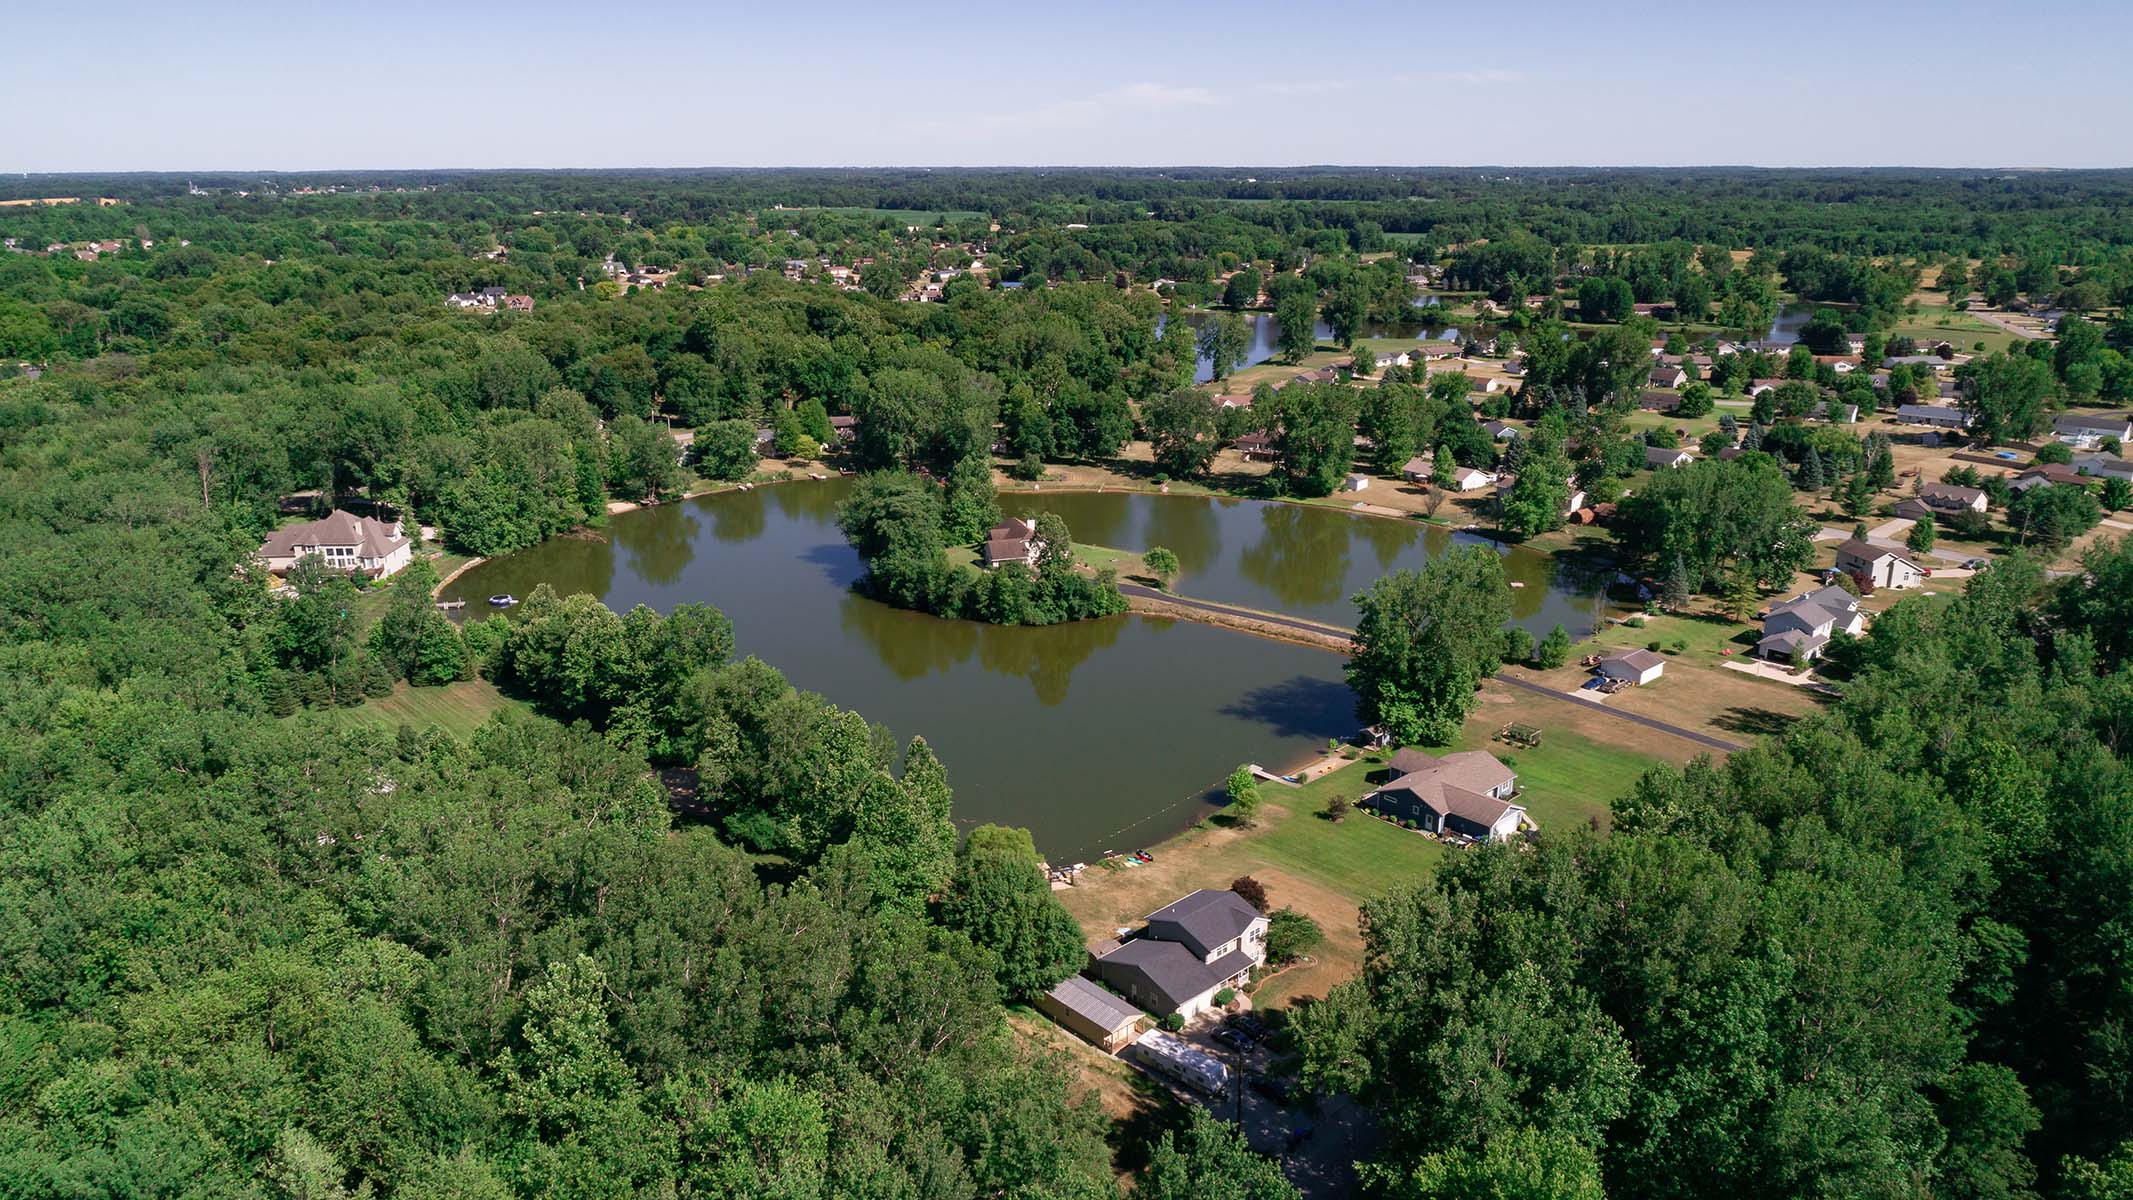 Lilly Center for Lakes & Streams image of Horseshoe Lake, Kosciusko County, Indiana